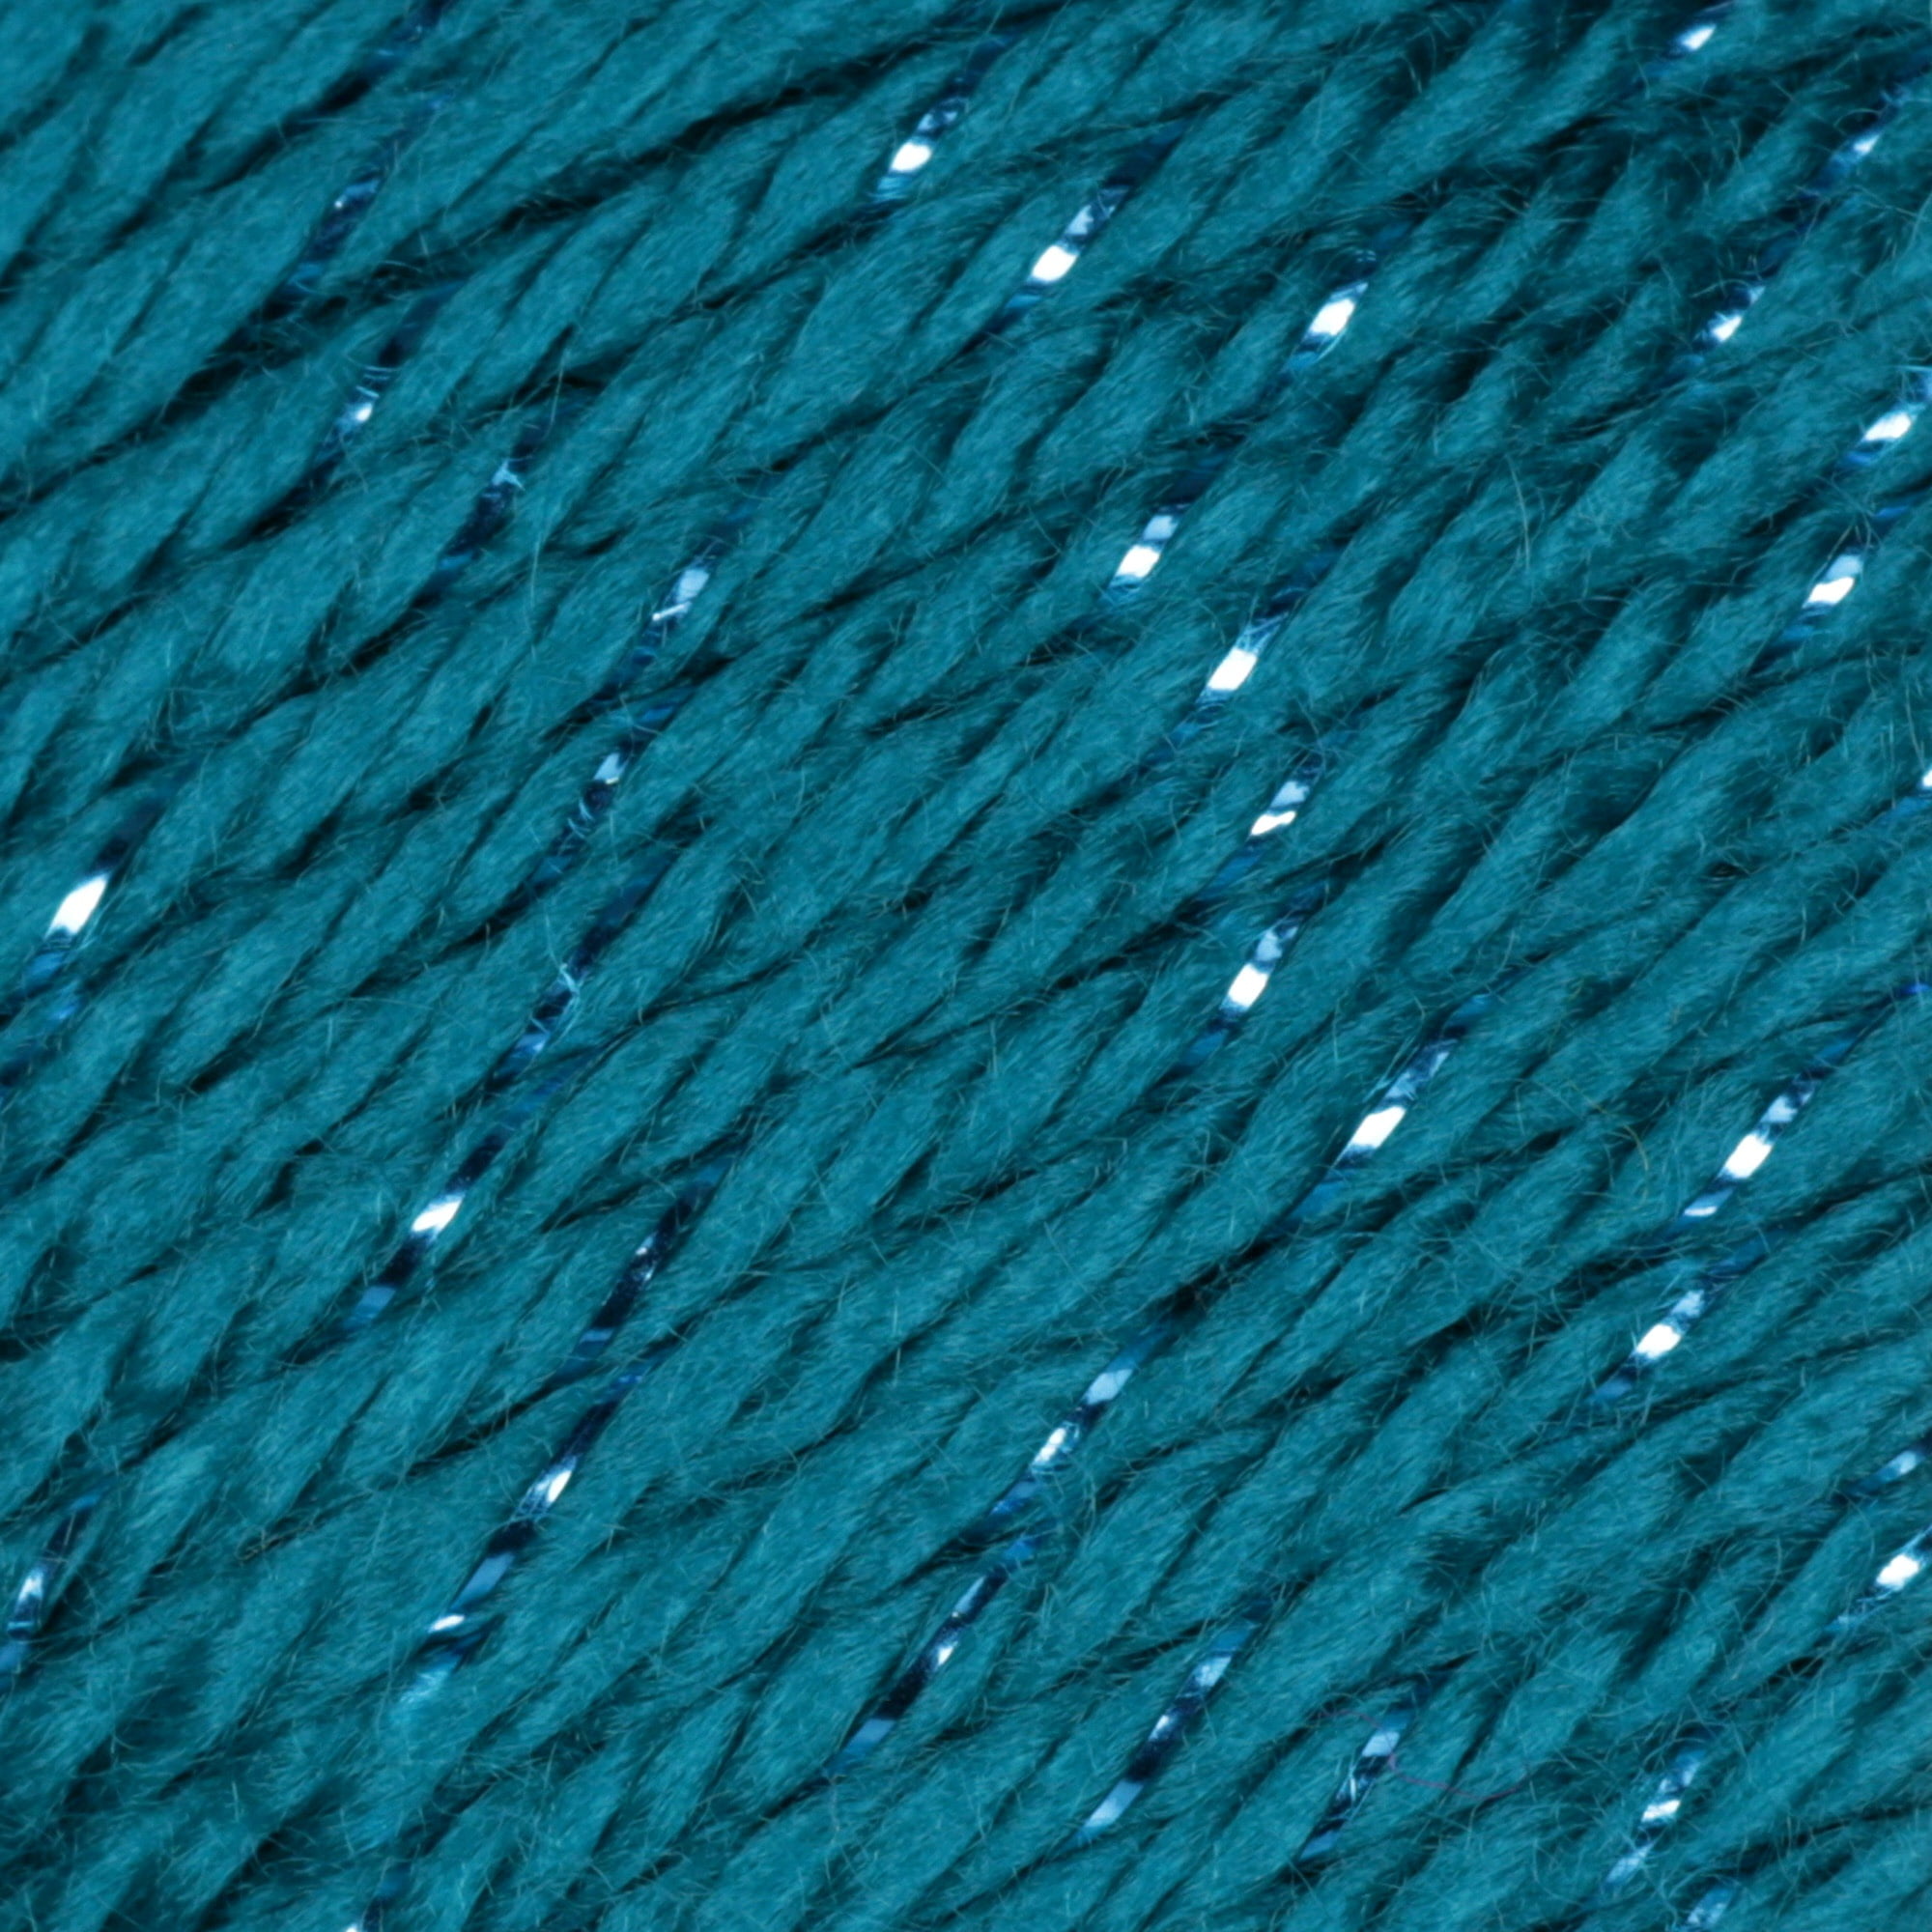 I Love This Yarn! Metallic Yarn 760 Coral Sparkle 5 oz. acrylic blend yarn